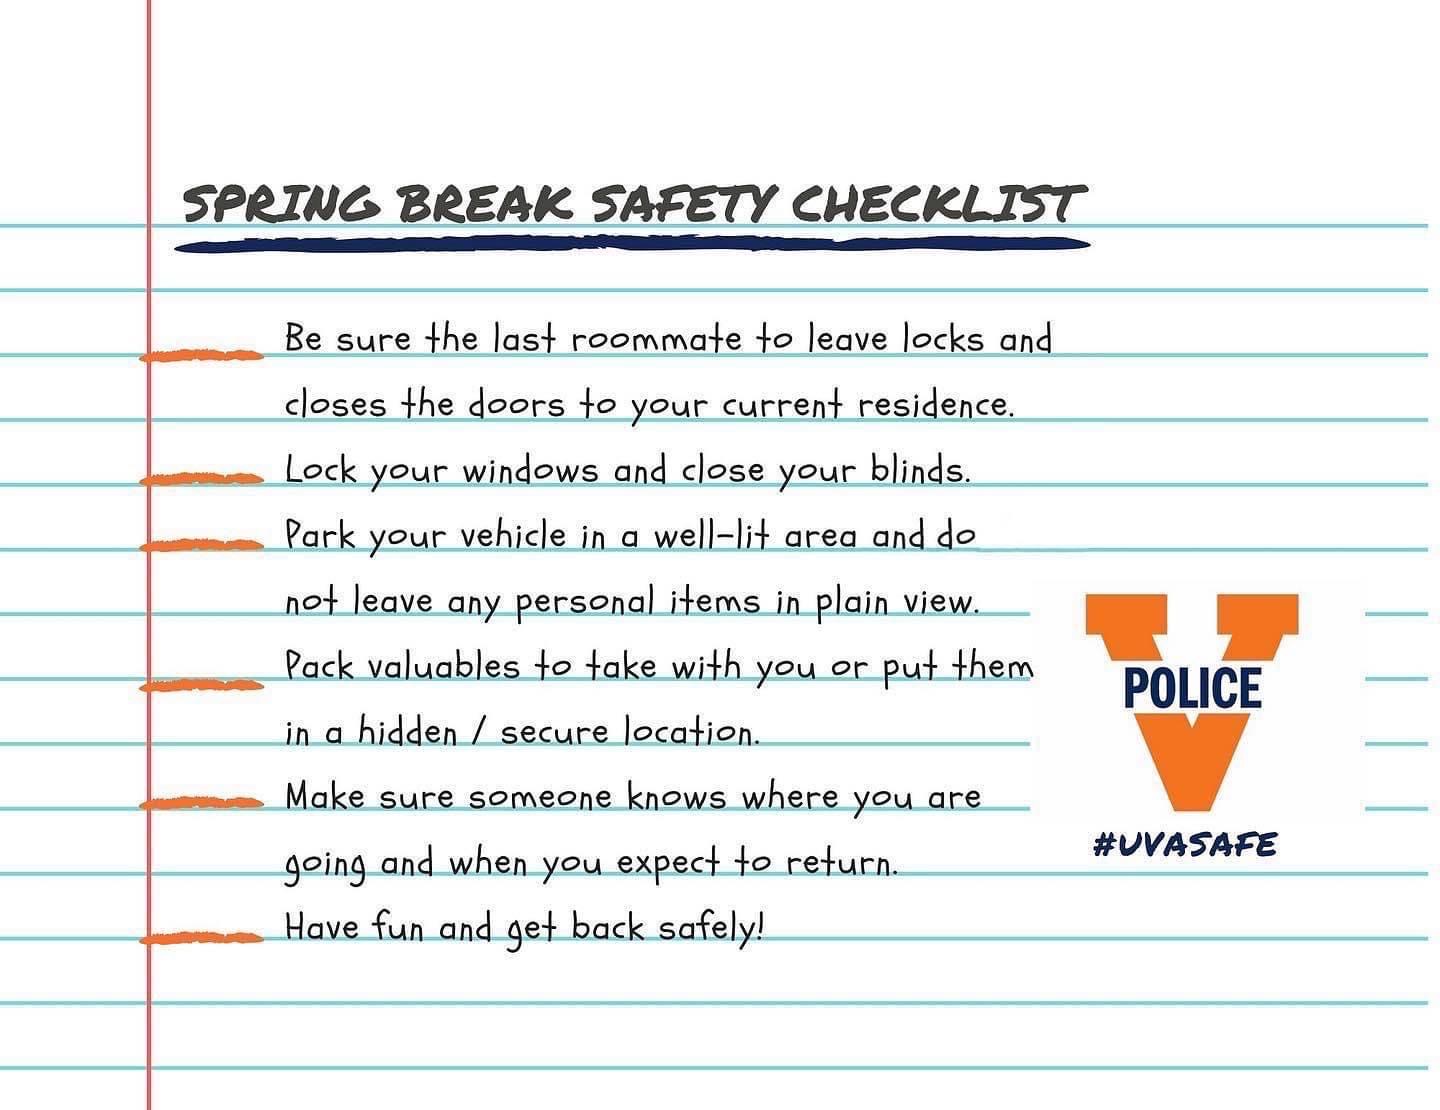 Spring Break Safety Checklist from UPD